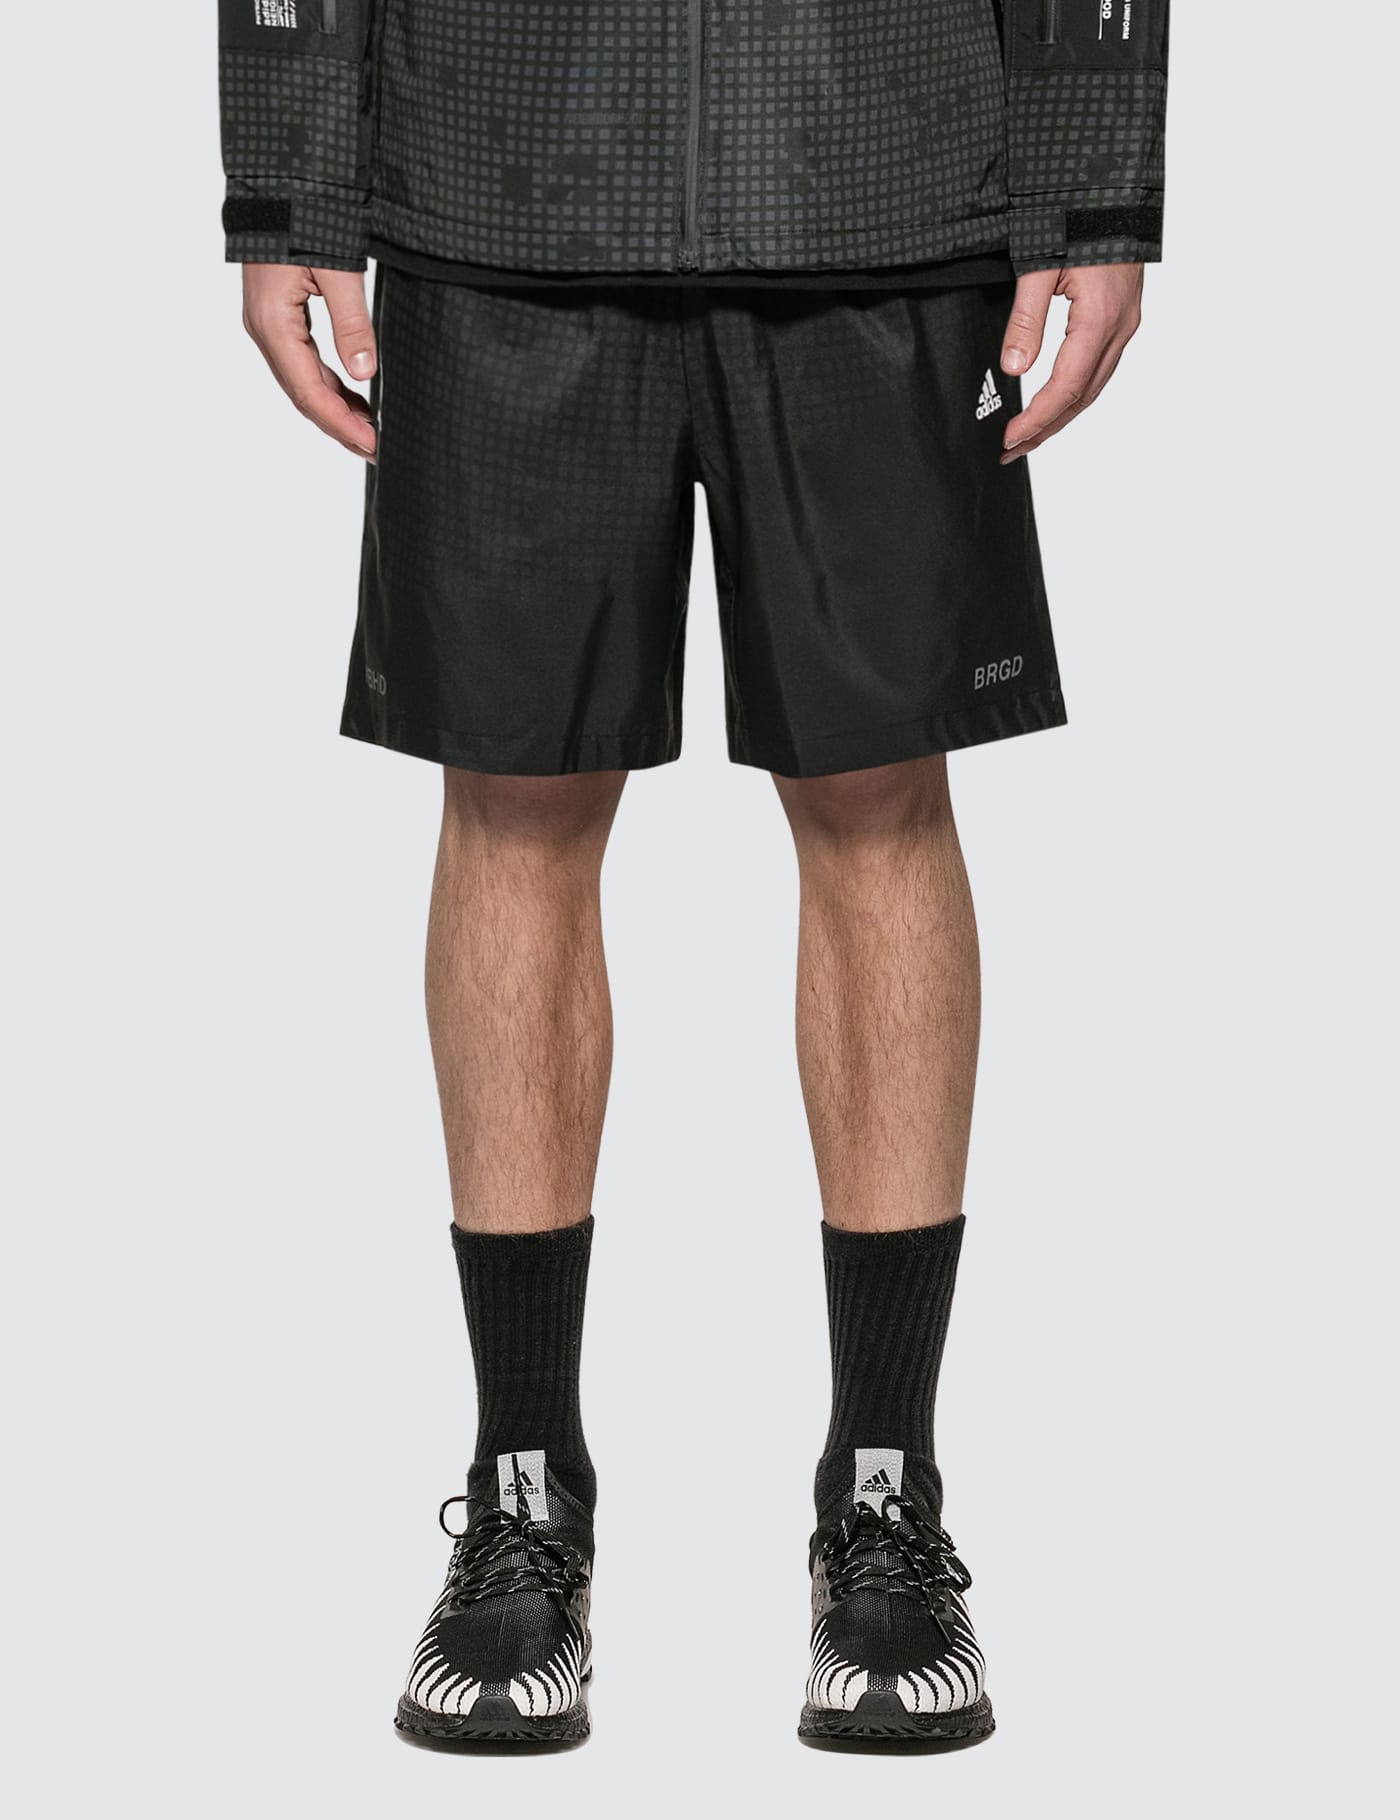 adidas x neighborhood shorts